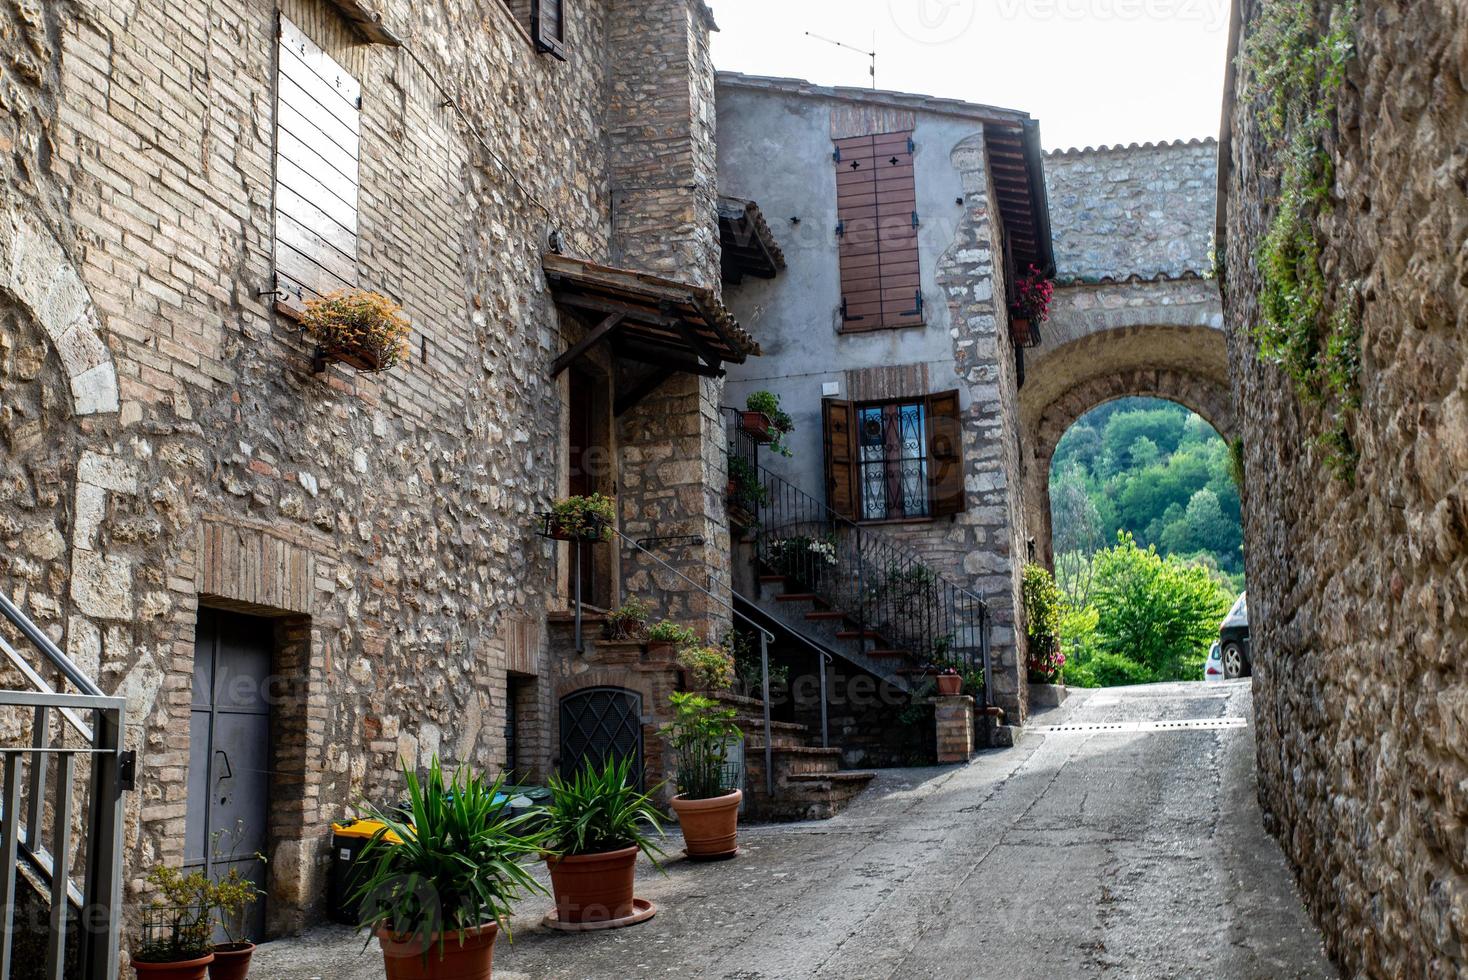 The village of Portaria in the municipality of Acquasparta, Umbria, Italy, 2020 photo